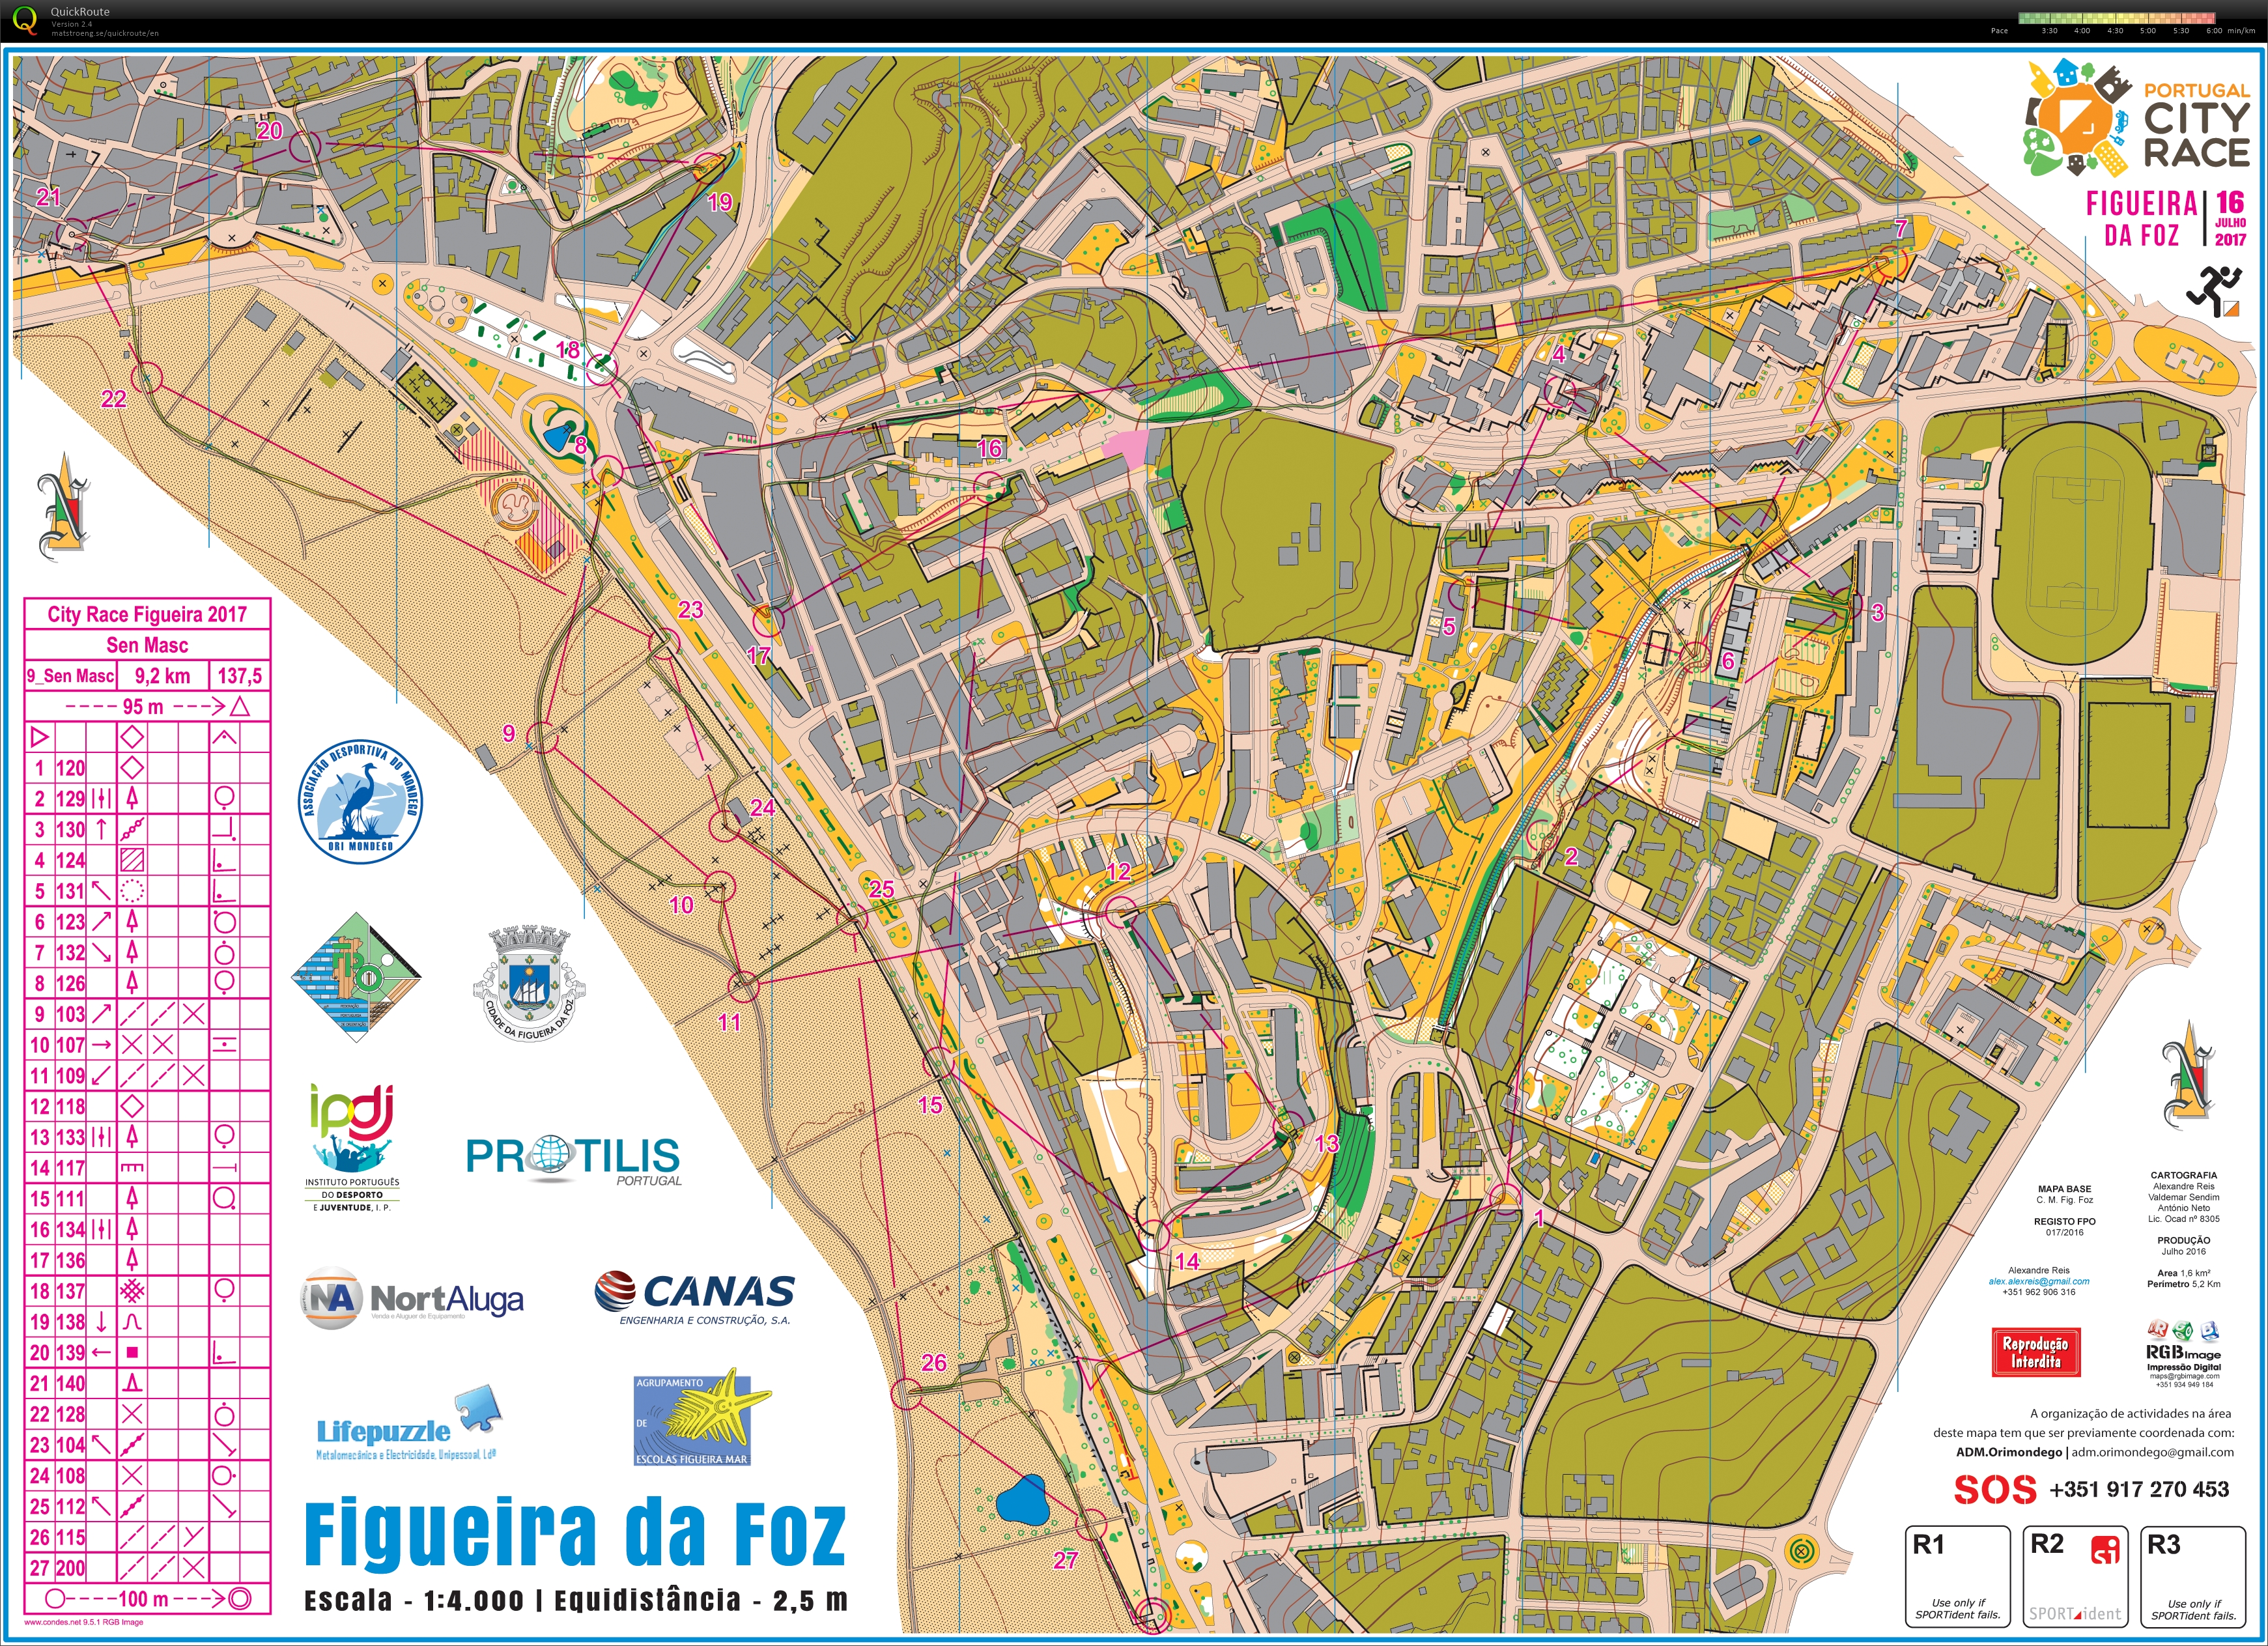 City Race Figueira da Foz 9km (15.07.2017)